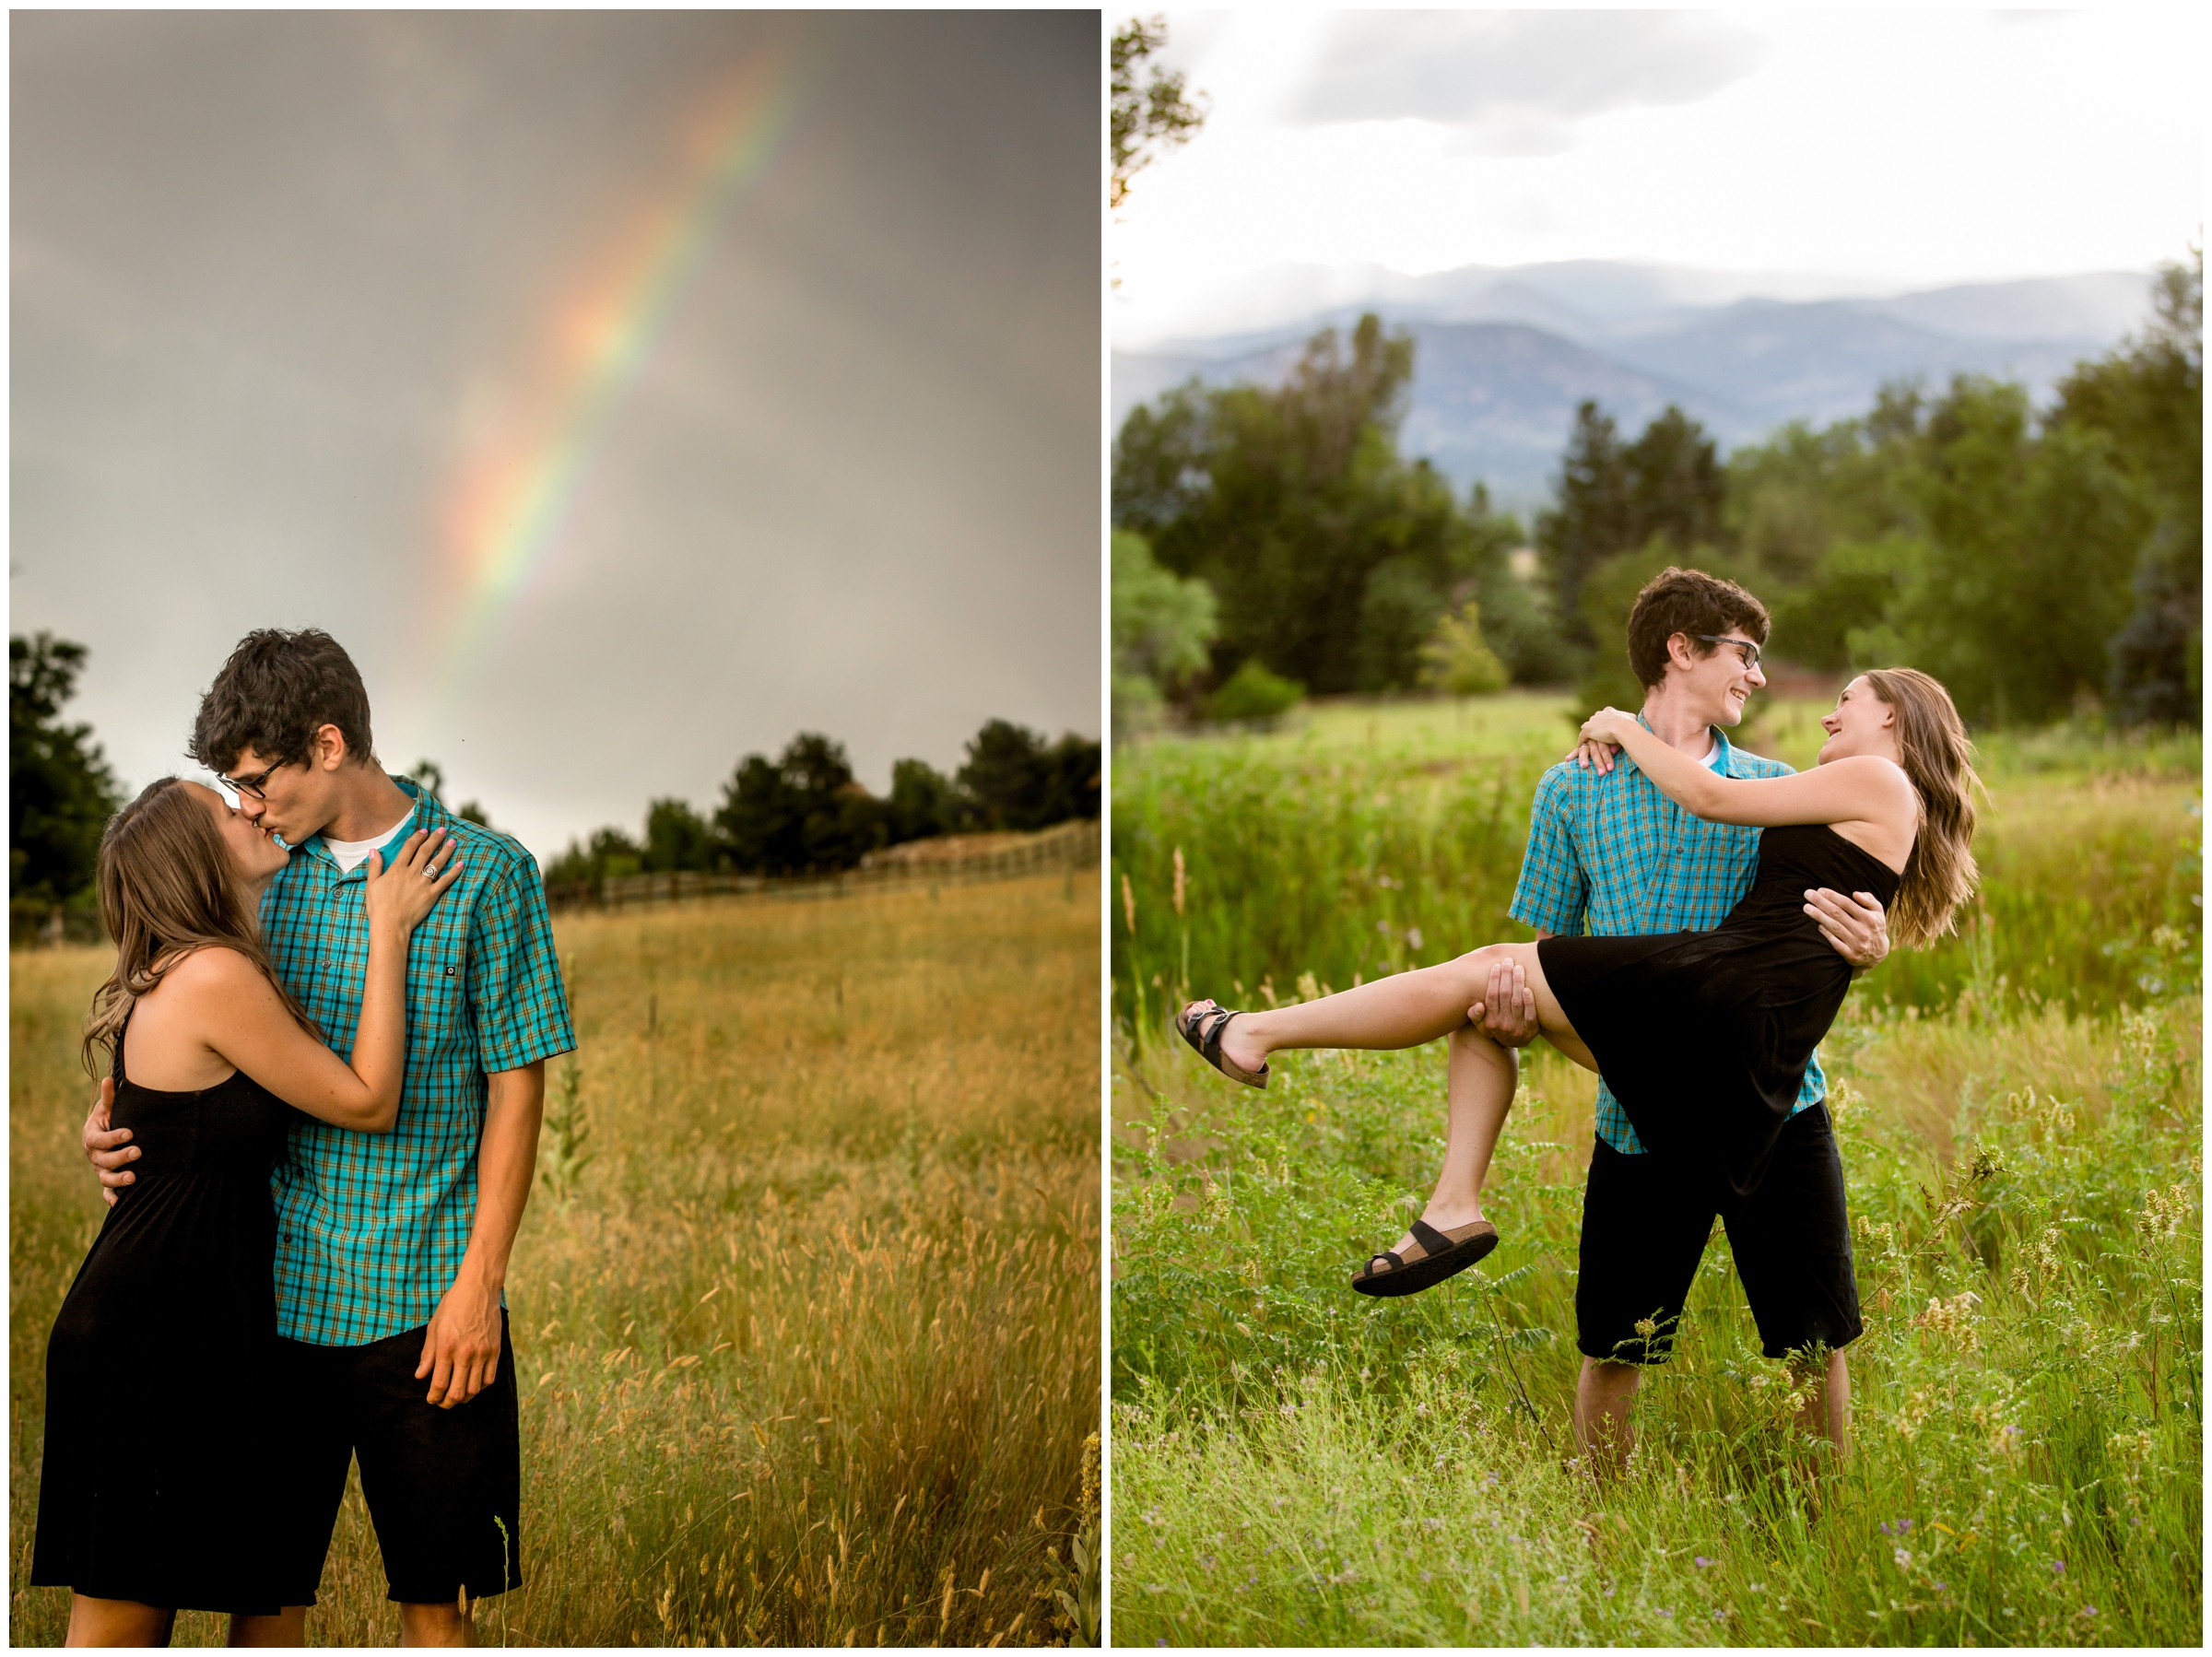 rainbow engagement pictures by Boulder Colorado photographer Plum Pretty Photography